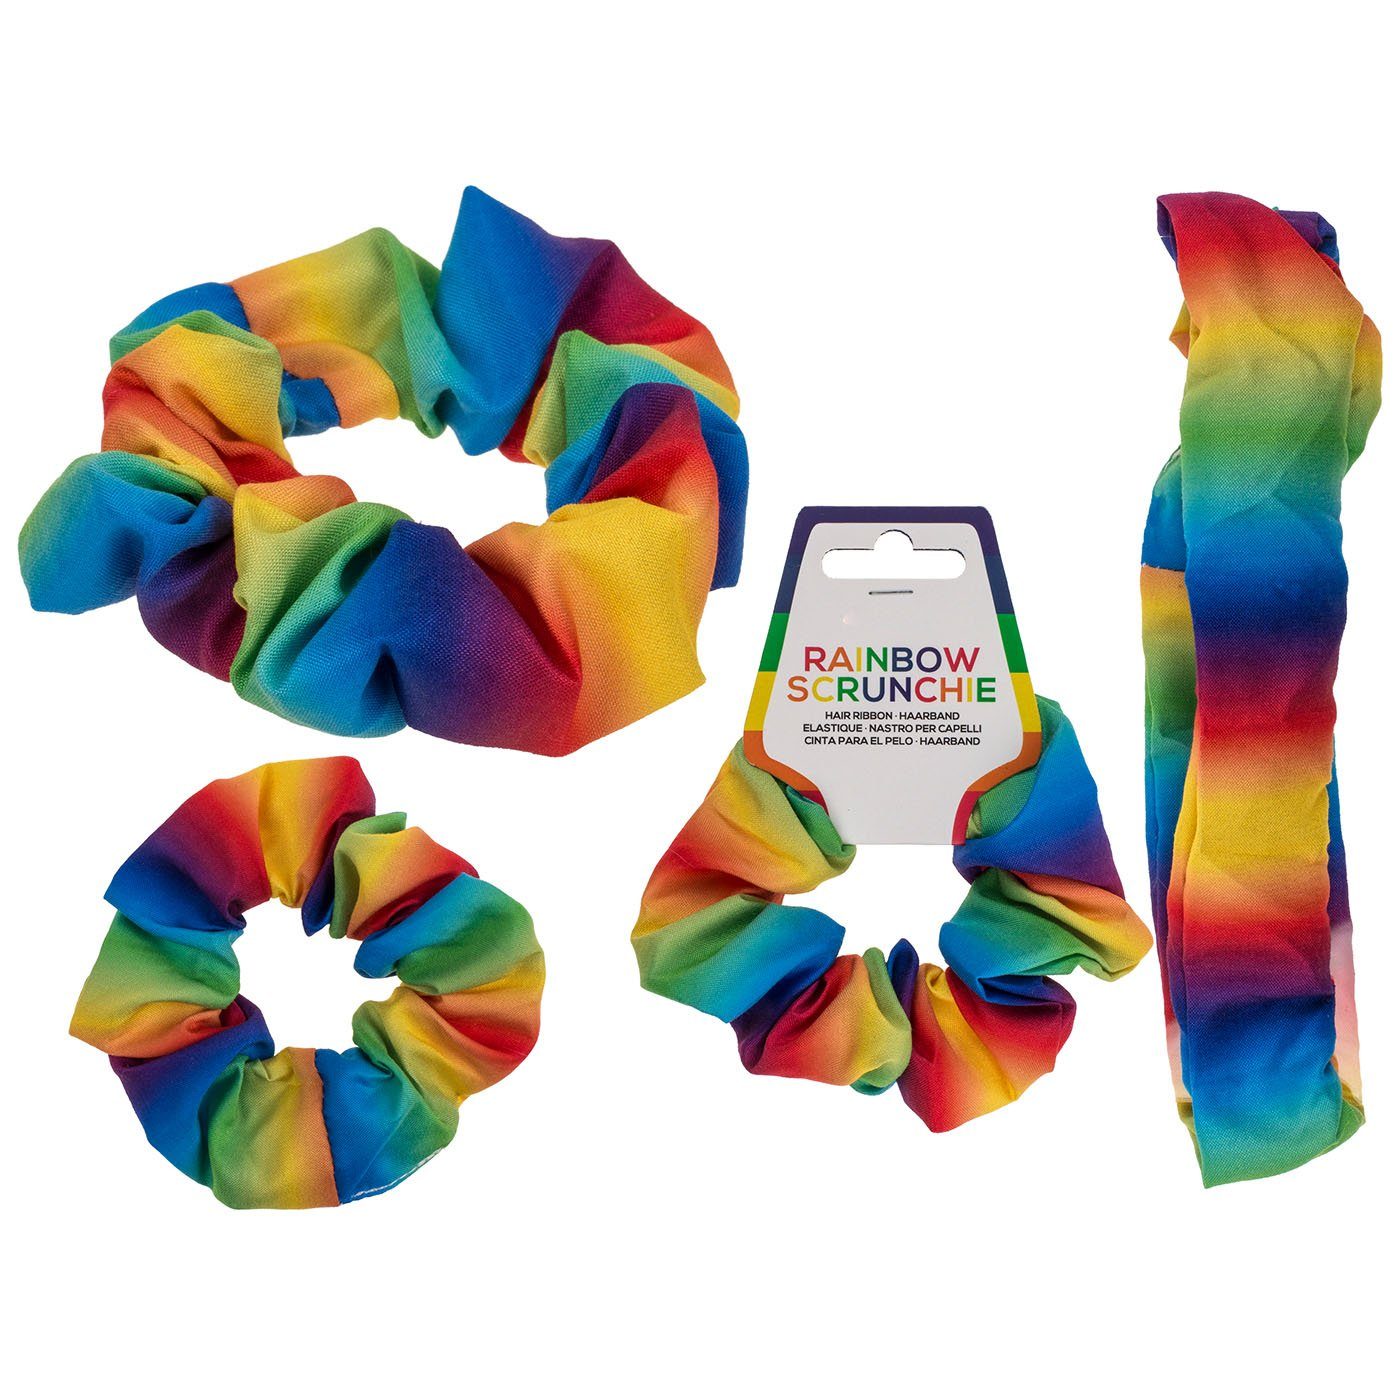 Haarband Scrunchie ReWu Pride Textil-Haarband Regenbogen